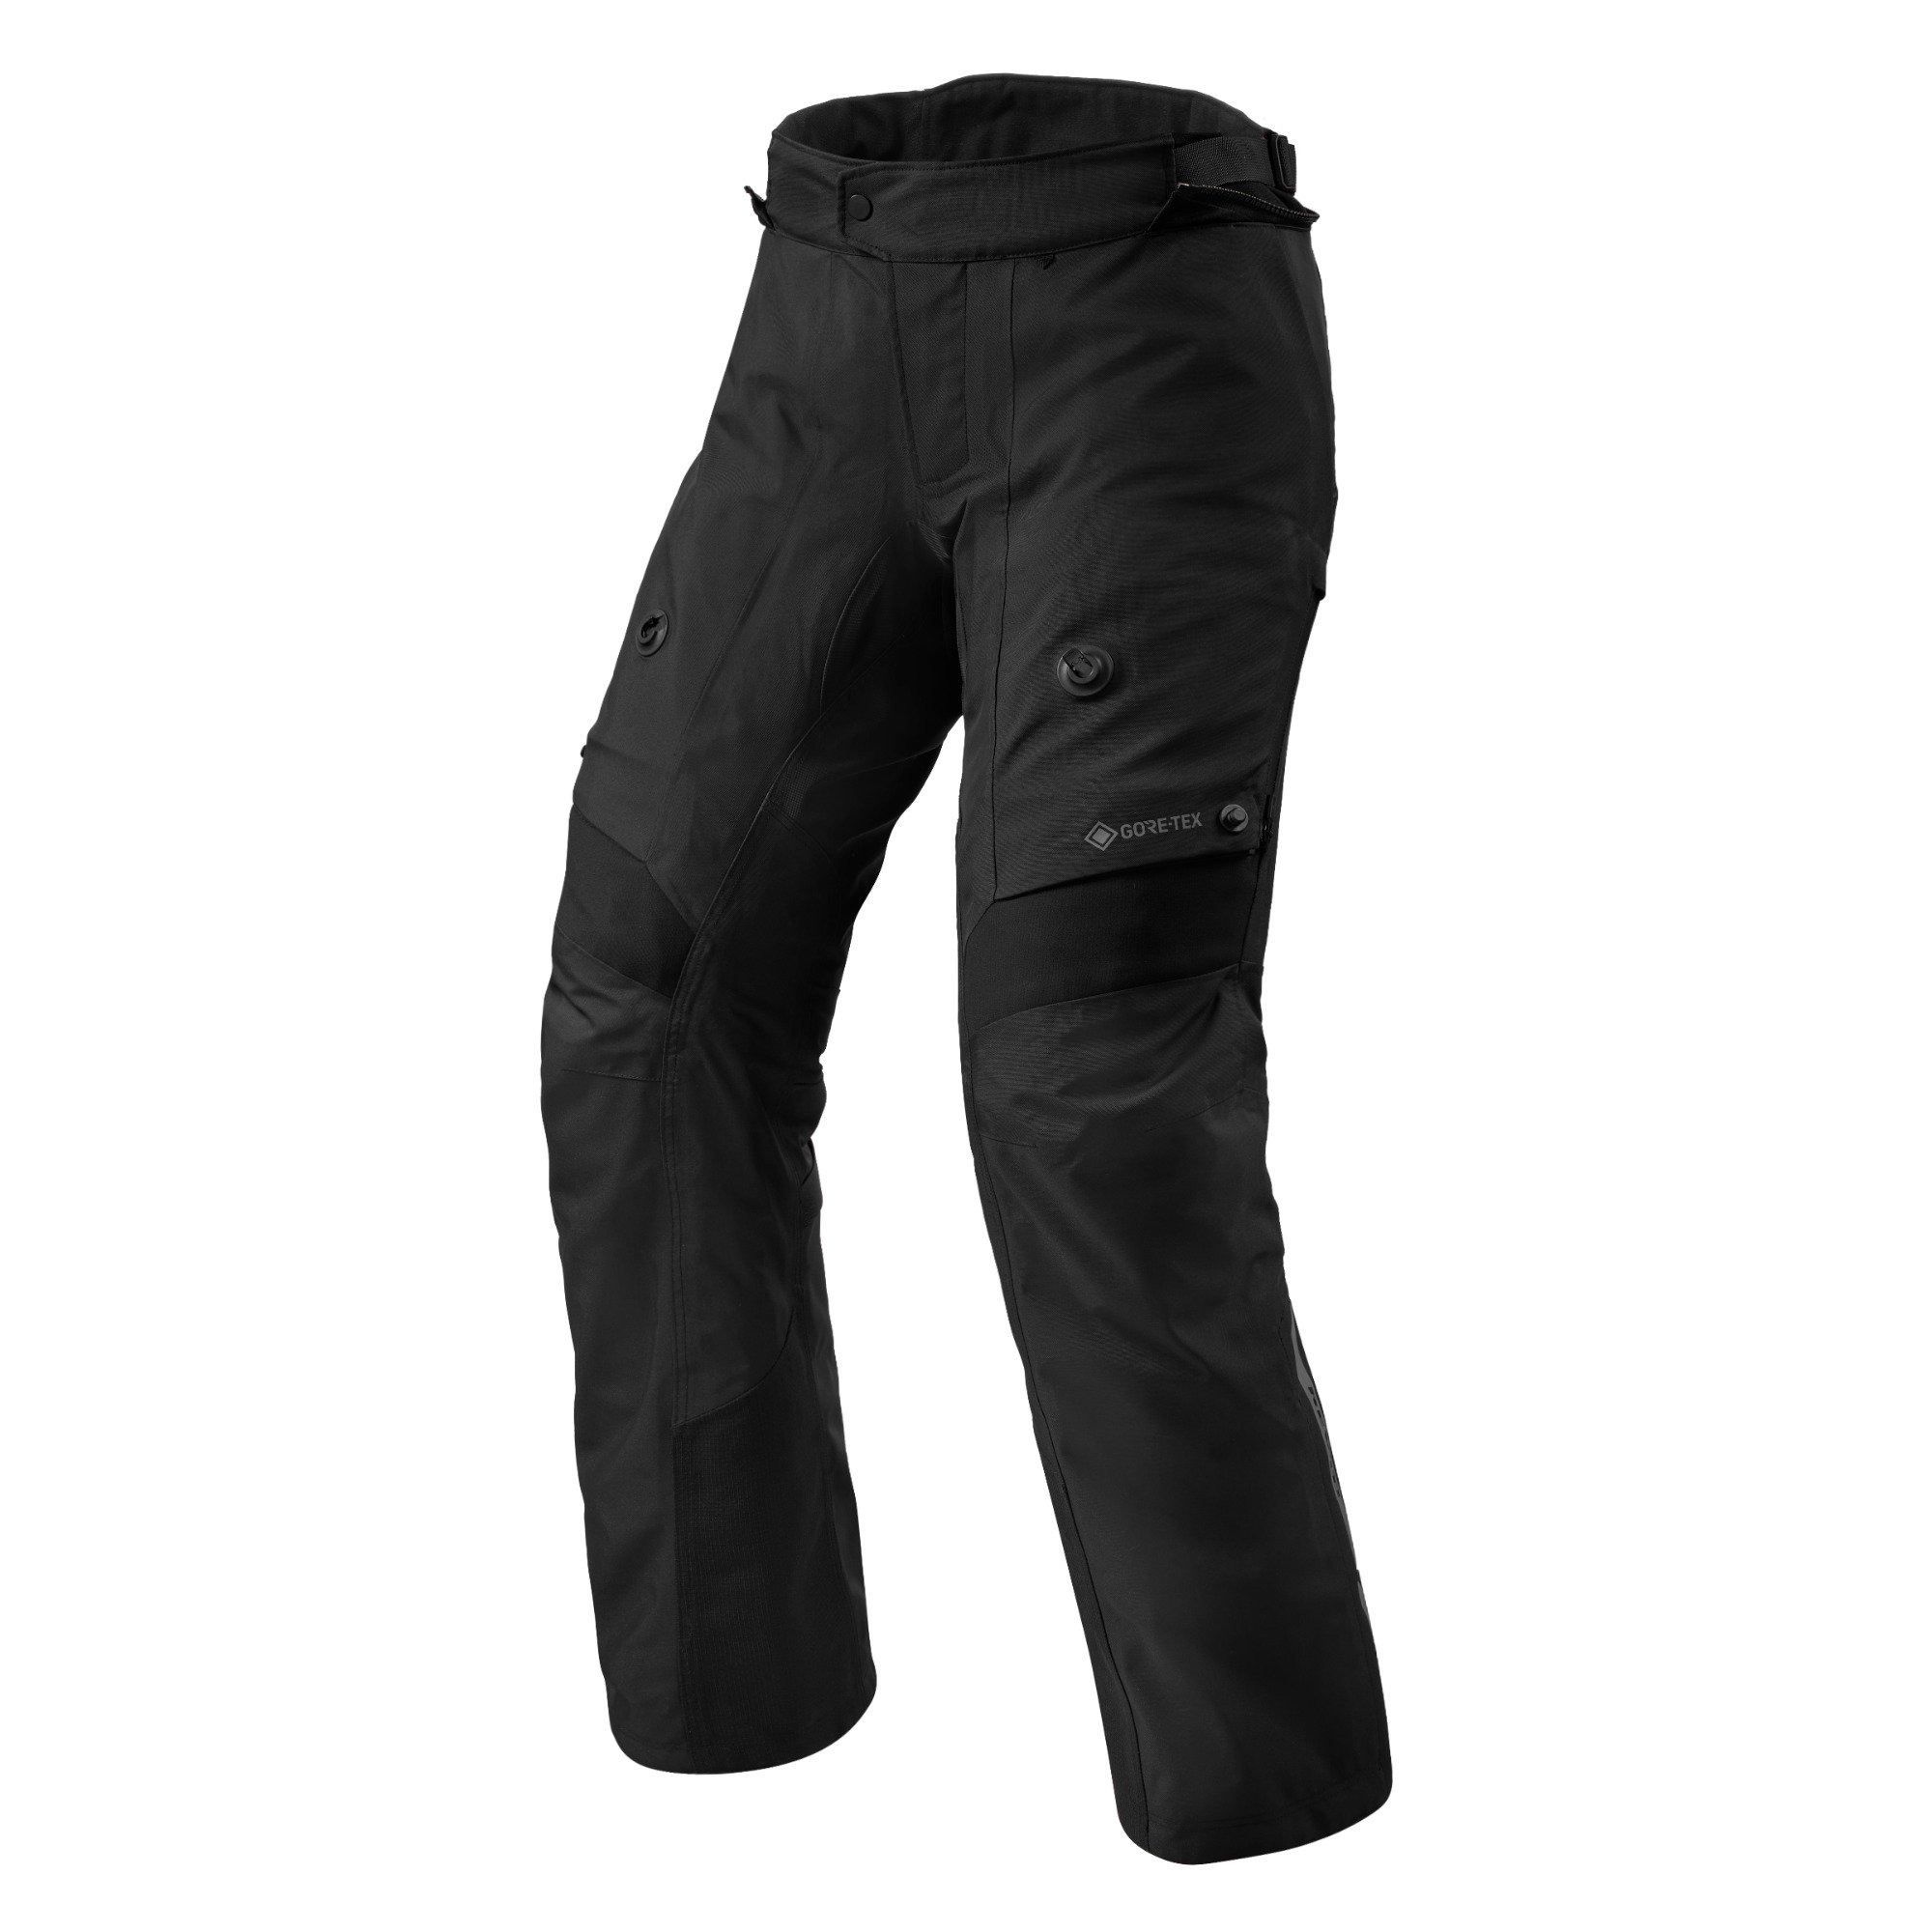 Image of REV'IT! Pants Poseidon 3 GTX Black Short Motorcycle Pants Size XL ID 8700001362528